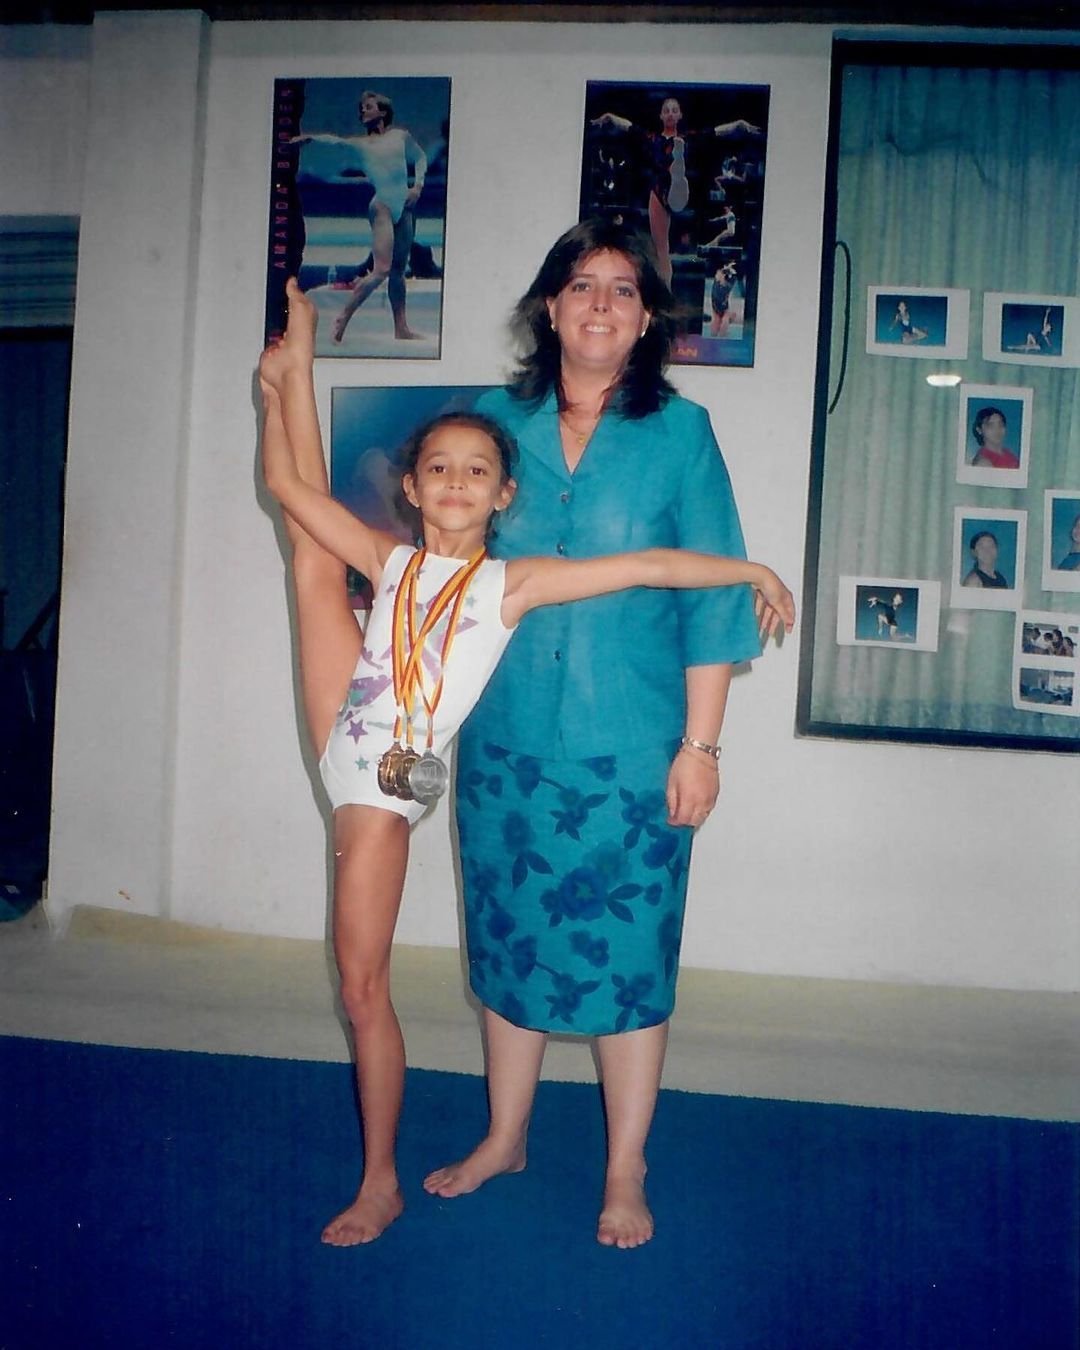 Farah Ann memuat naik gambar kenangannya semasa awal pembabitan sebagai atlet gimnas.